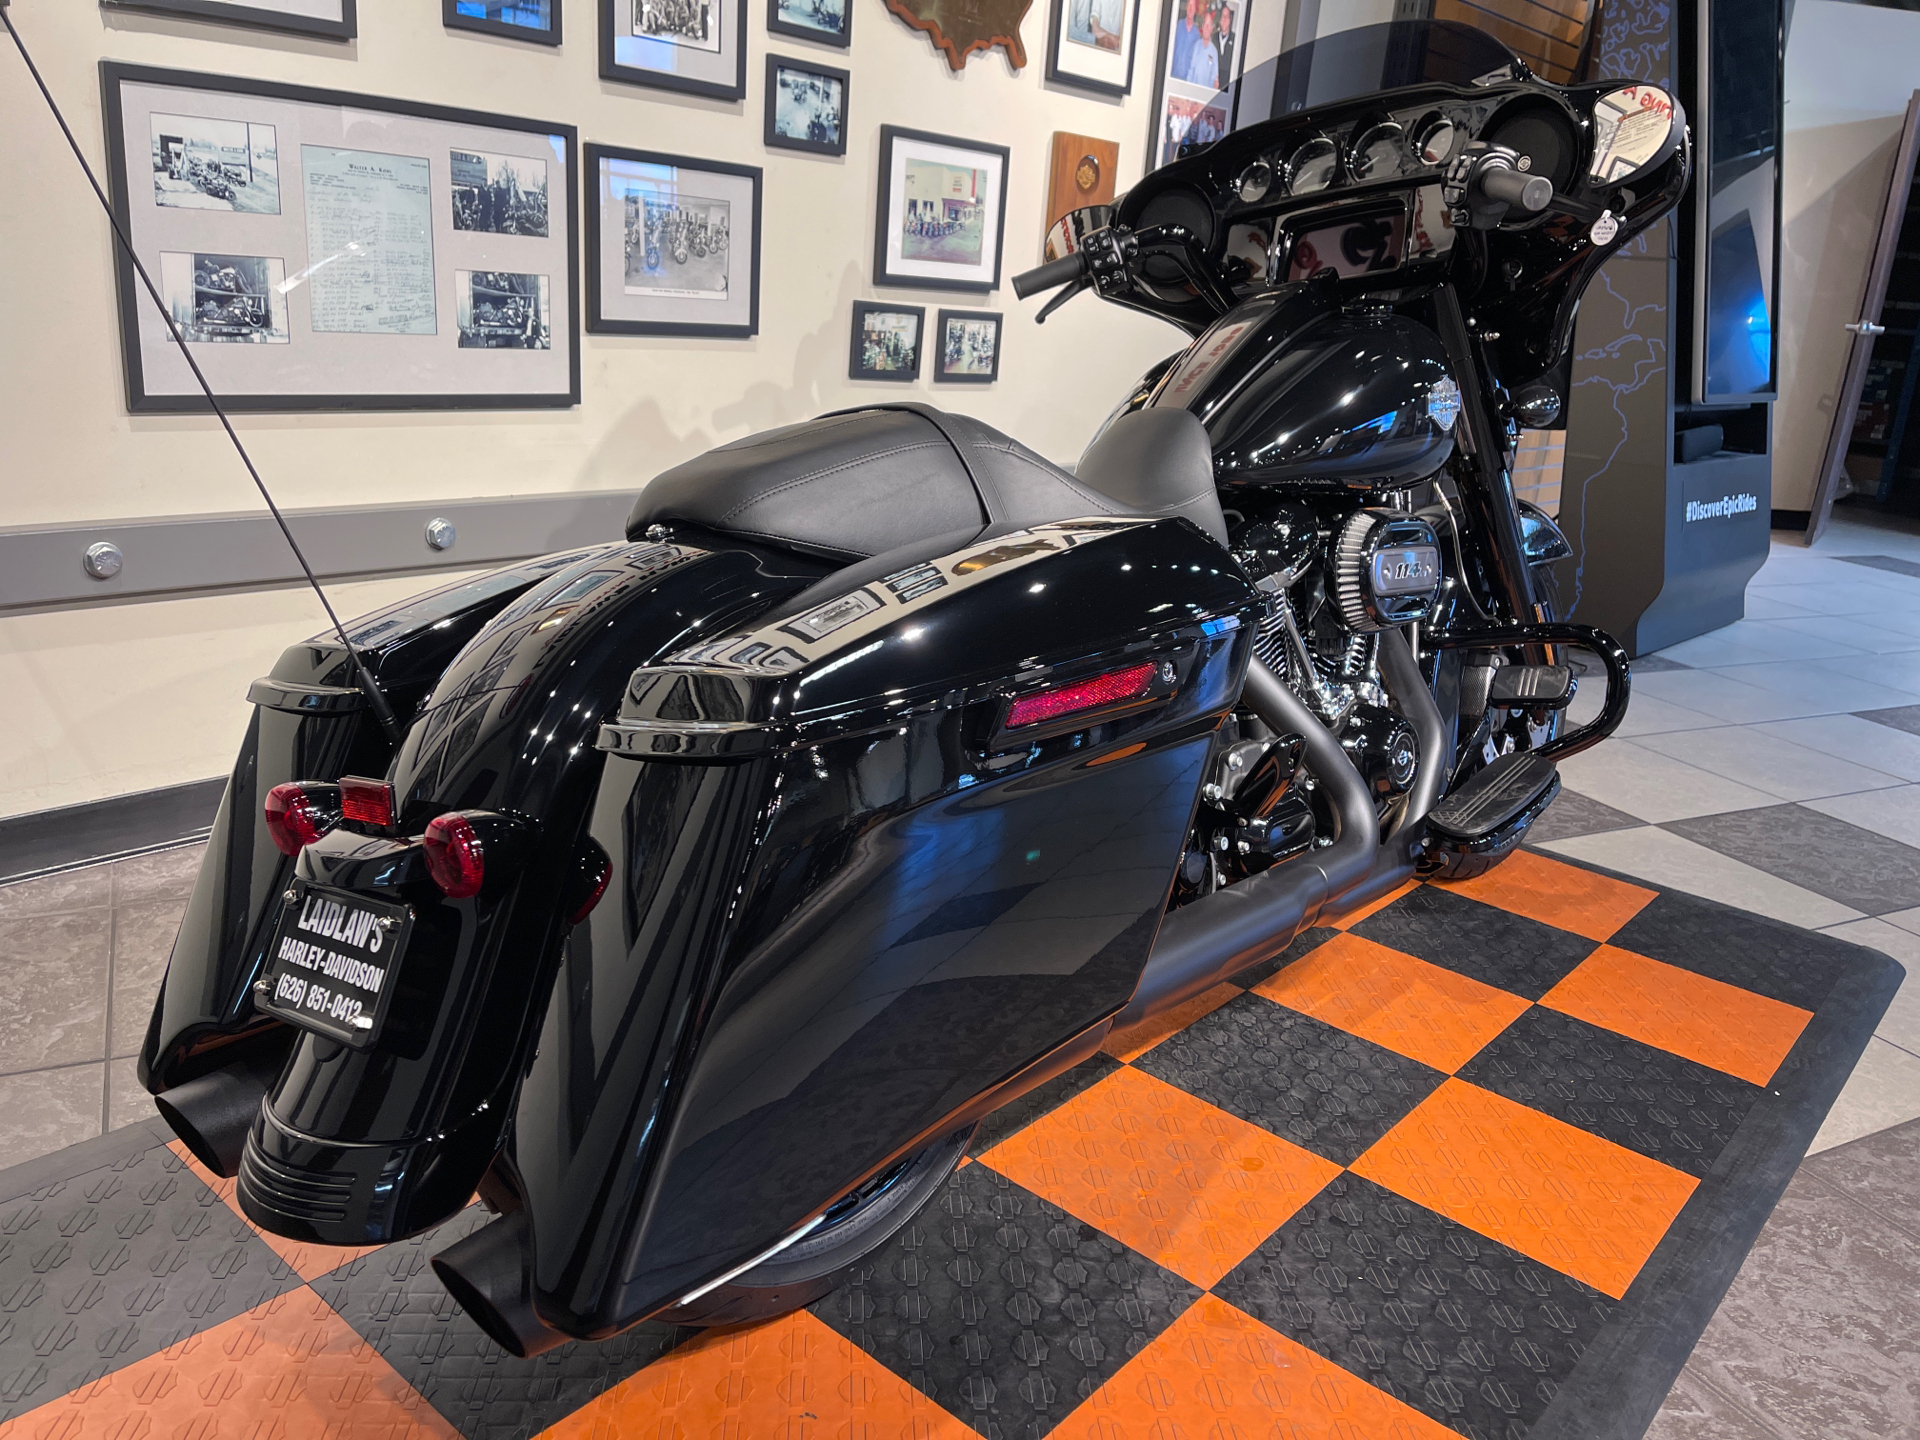 2022 Harley-Davidson Street Glide® Special in Baldwin Park, California - Photo 6